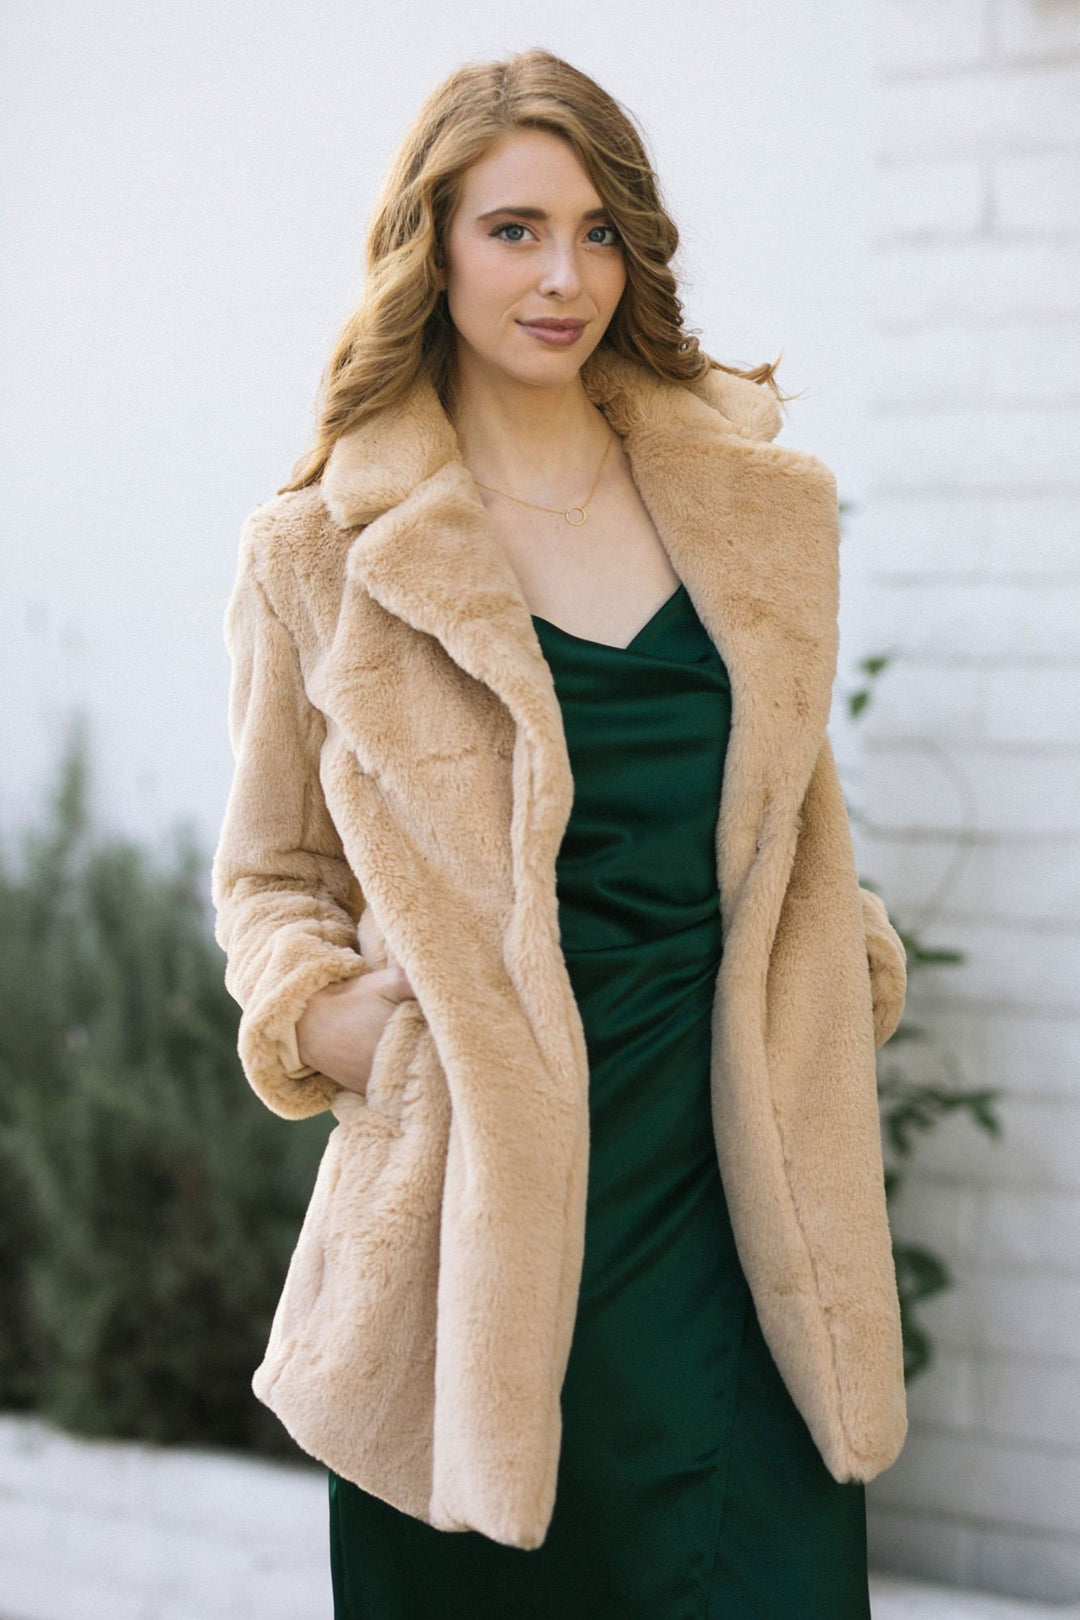 Alicia Faux Fur Coat Outerwear Aakaa Beige Small 